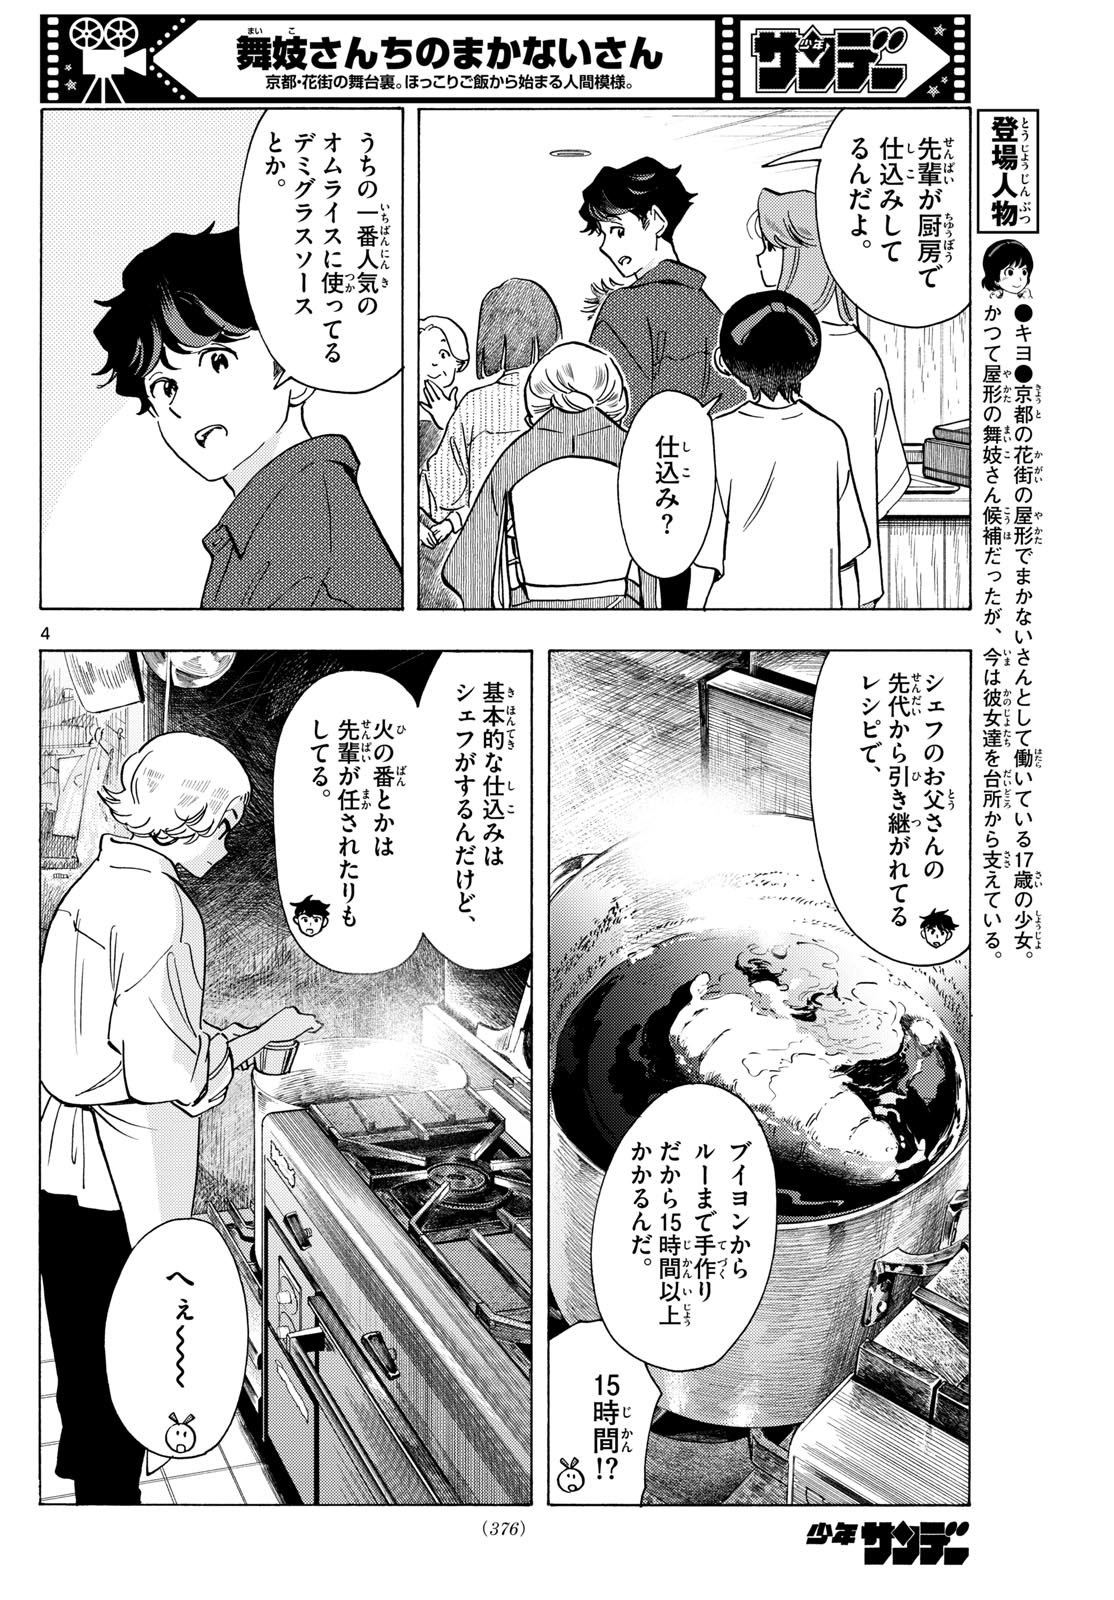 Maiko-san Chi no Makanai-san - Chapter 301 - Page 4